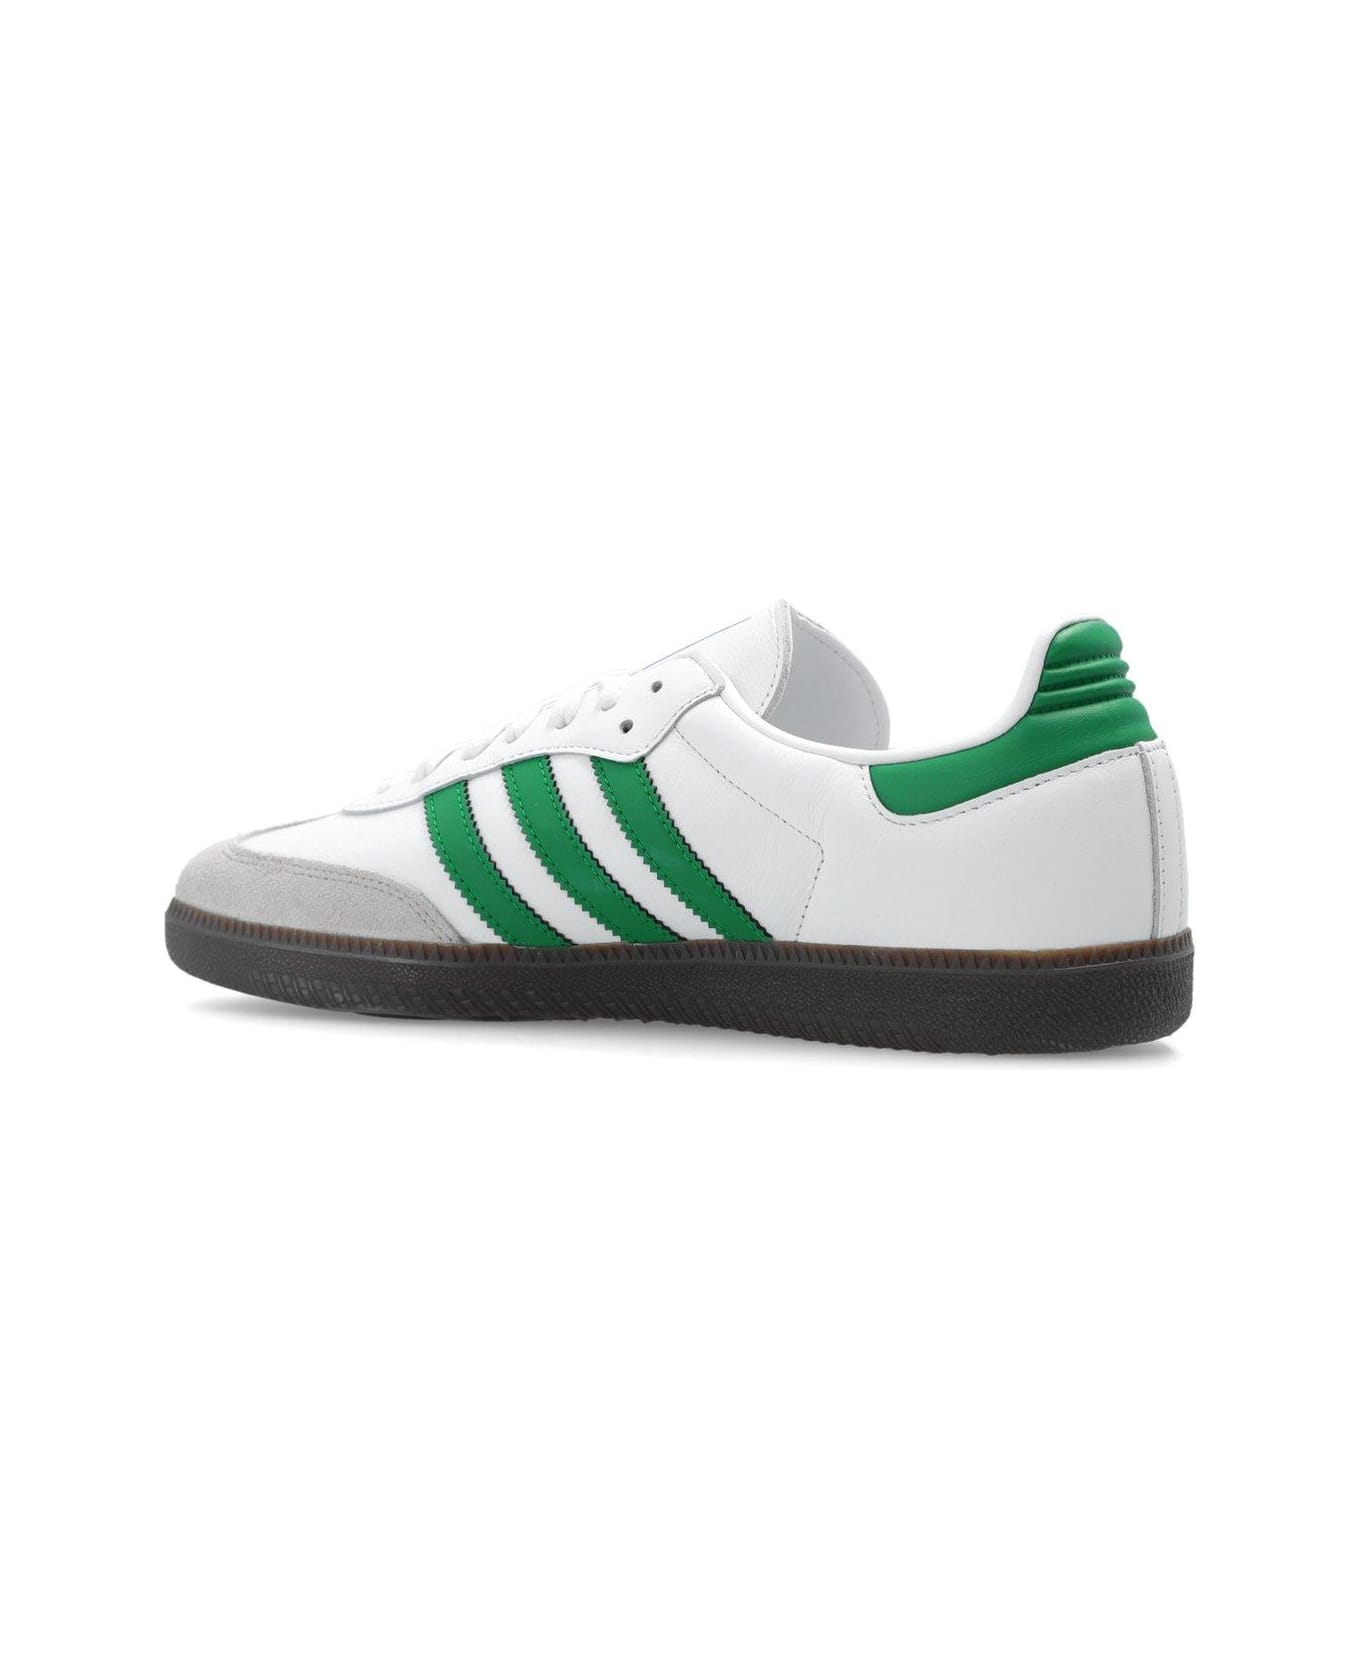 Adidas Originals Samba Og Lace-up Sneakers - White Green